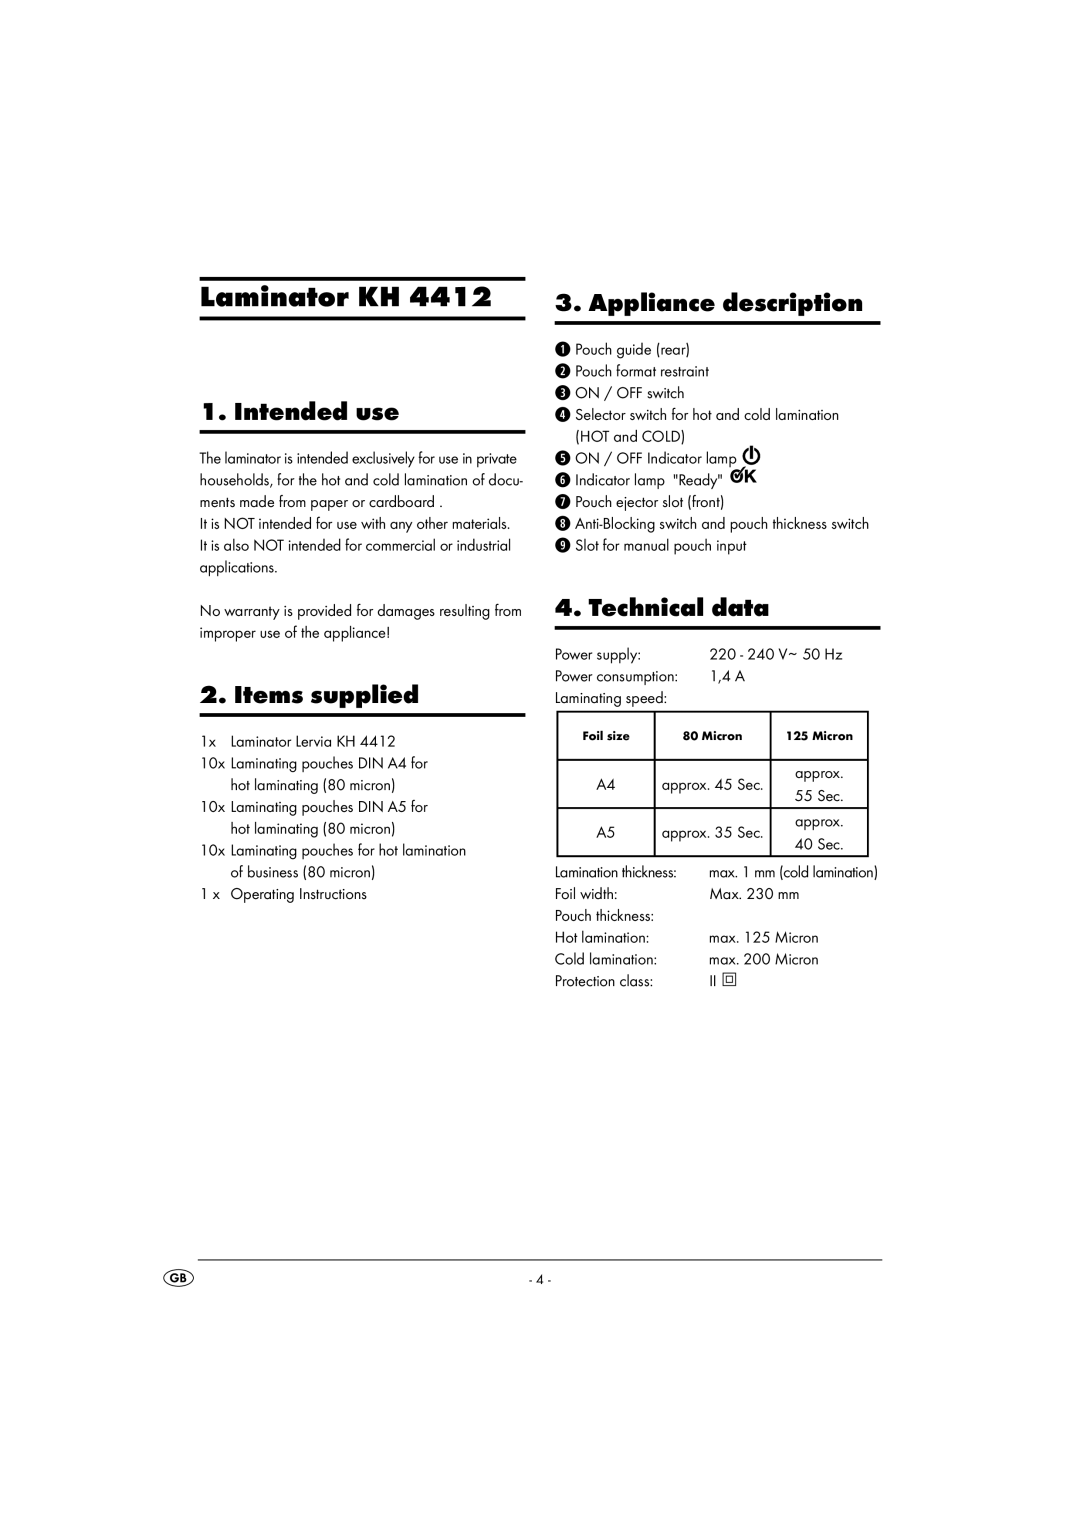 Kompernass KH 4412 manual Laminator KH, Intended use, Items supplied, Appliance description, Technical data 